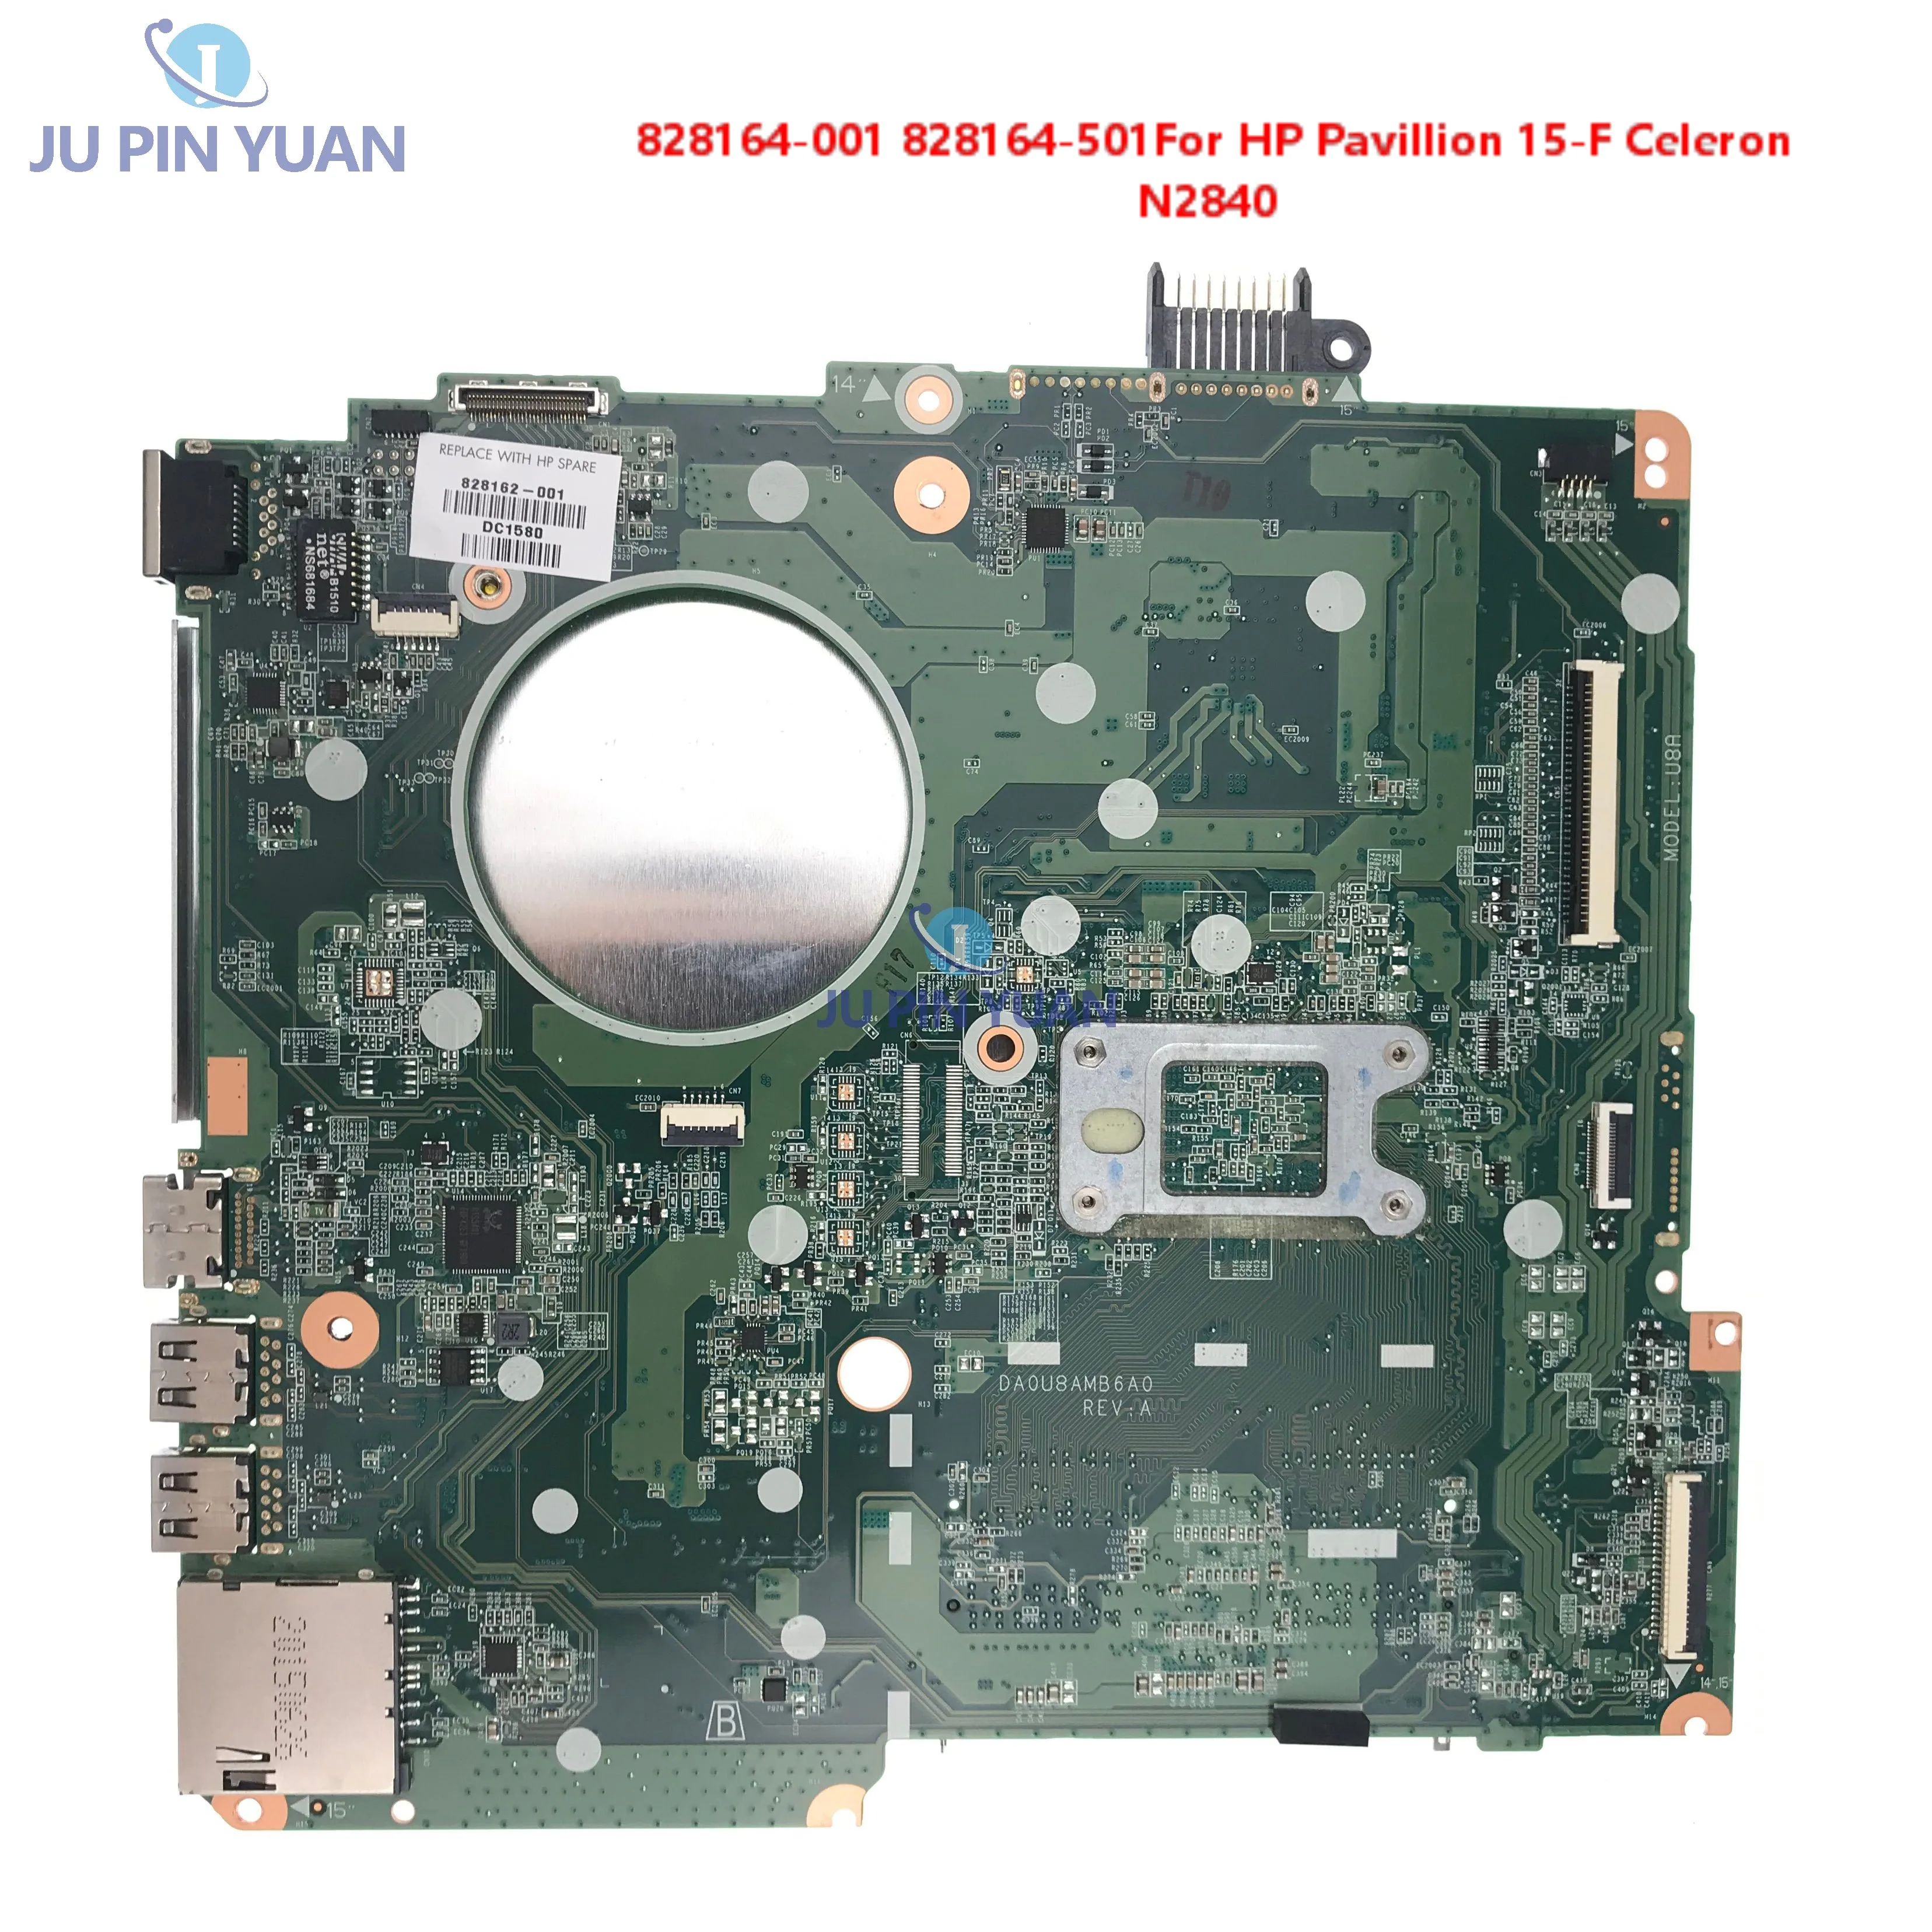 

For HP Pavillion 15-F Celeron N2840 Notebook Mainboard DA0U8AMB6A0 SR1YJ 828164-001 828164-501 Laptop Motherboard